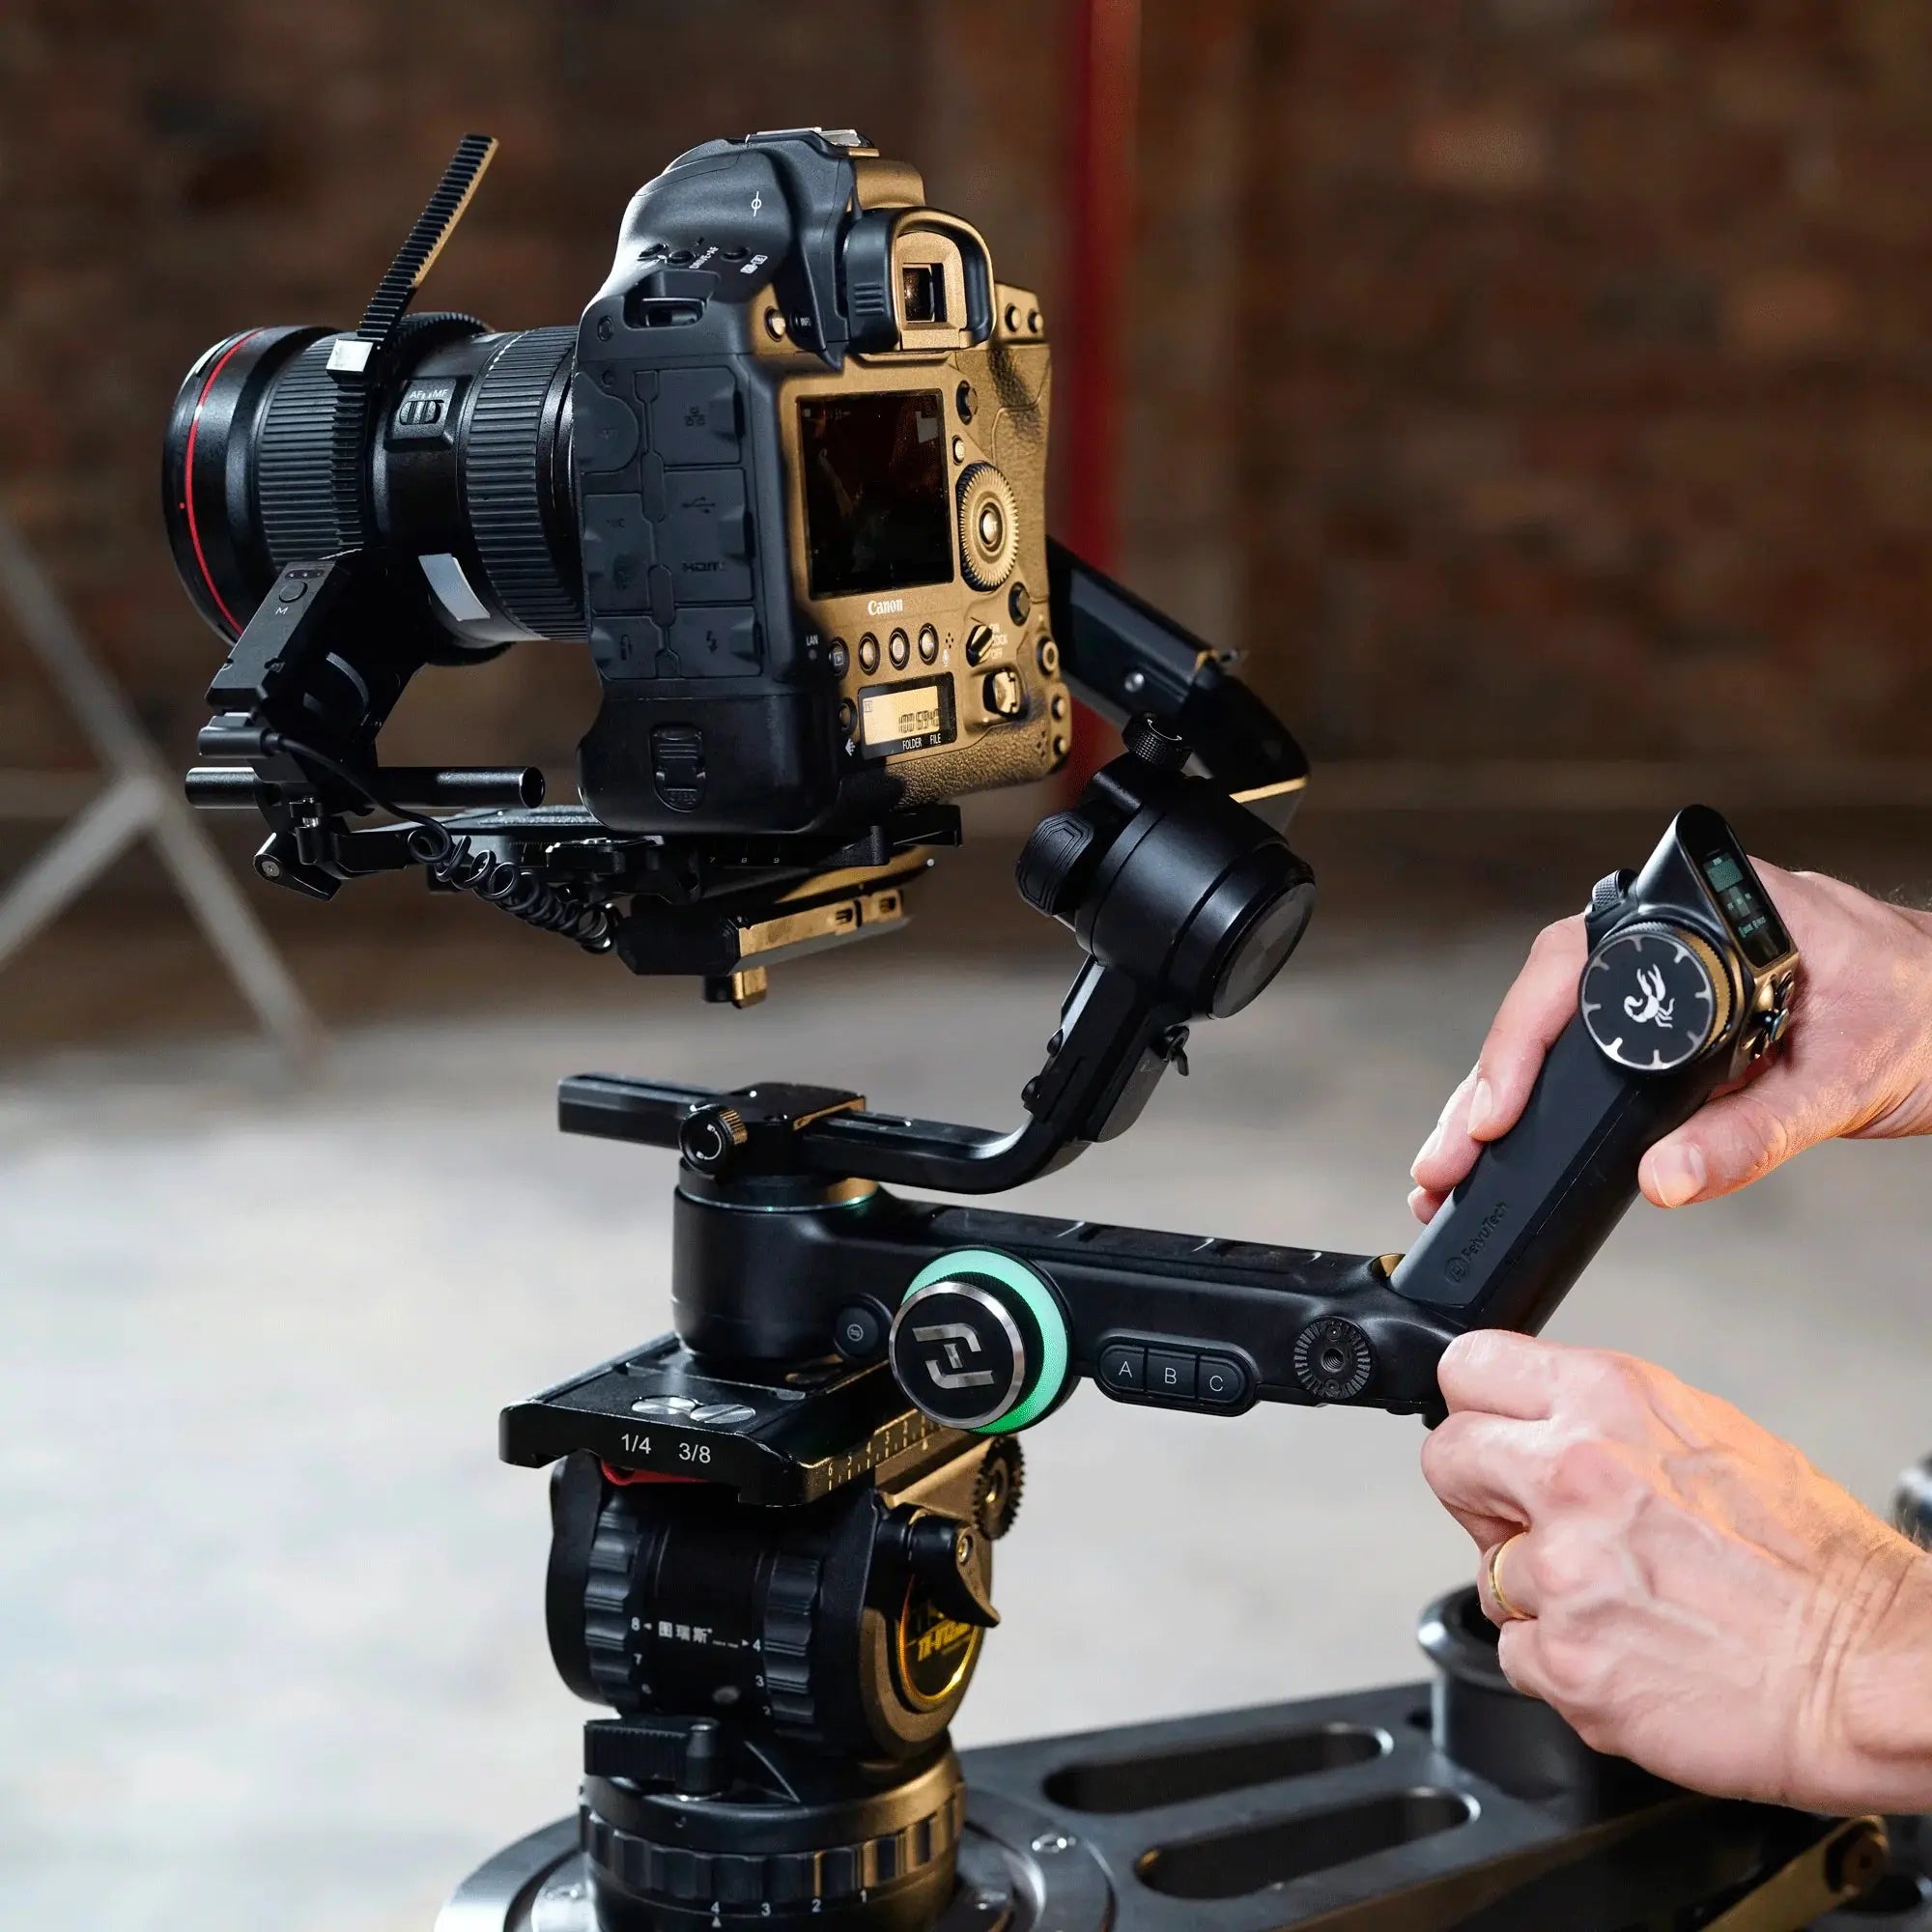 Feiyu Scorp Pro Detachable 3-Axis Professional Gimbal Stabilizer for Cinema DSLR Mirrorless Camera1